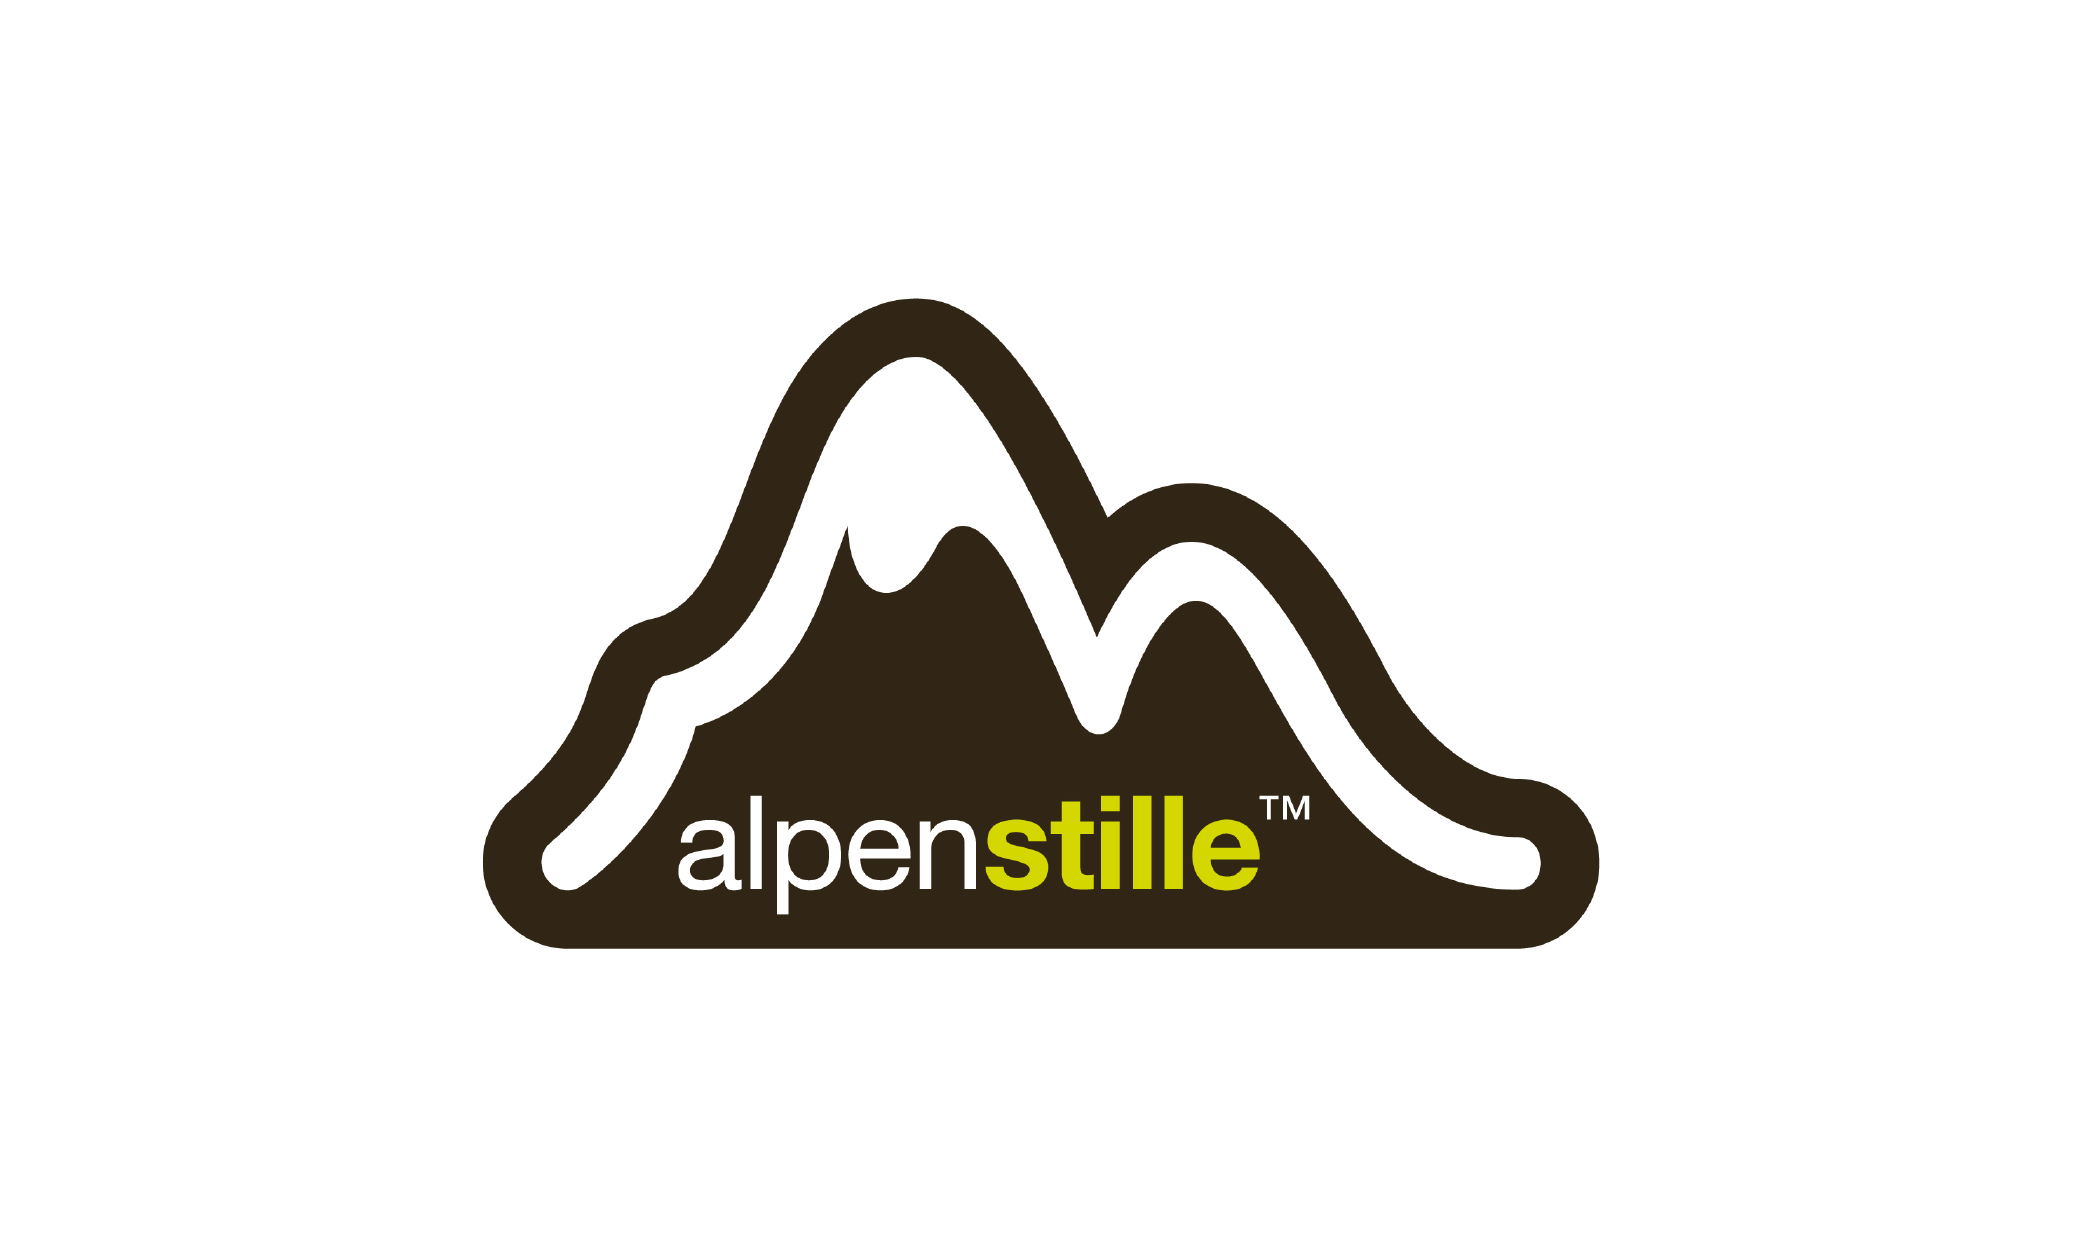 Alpenstille